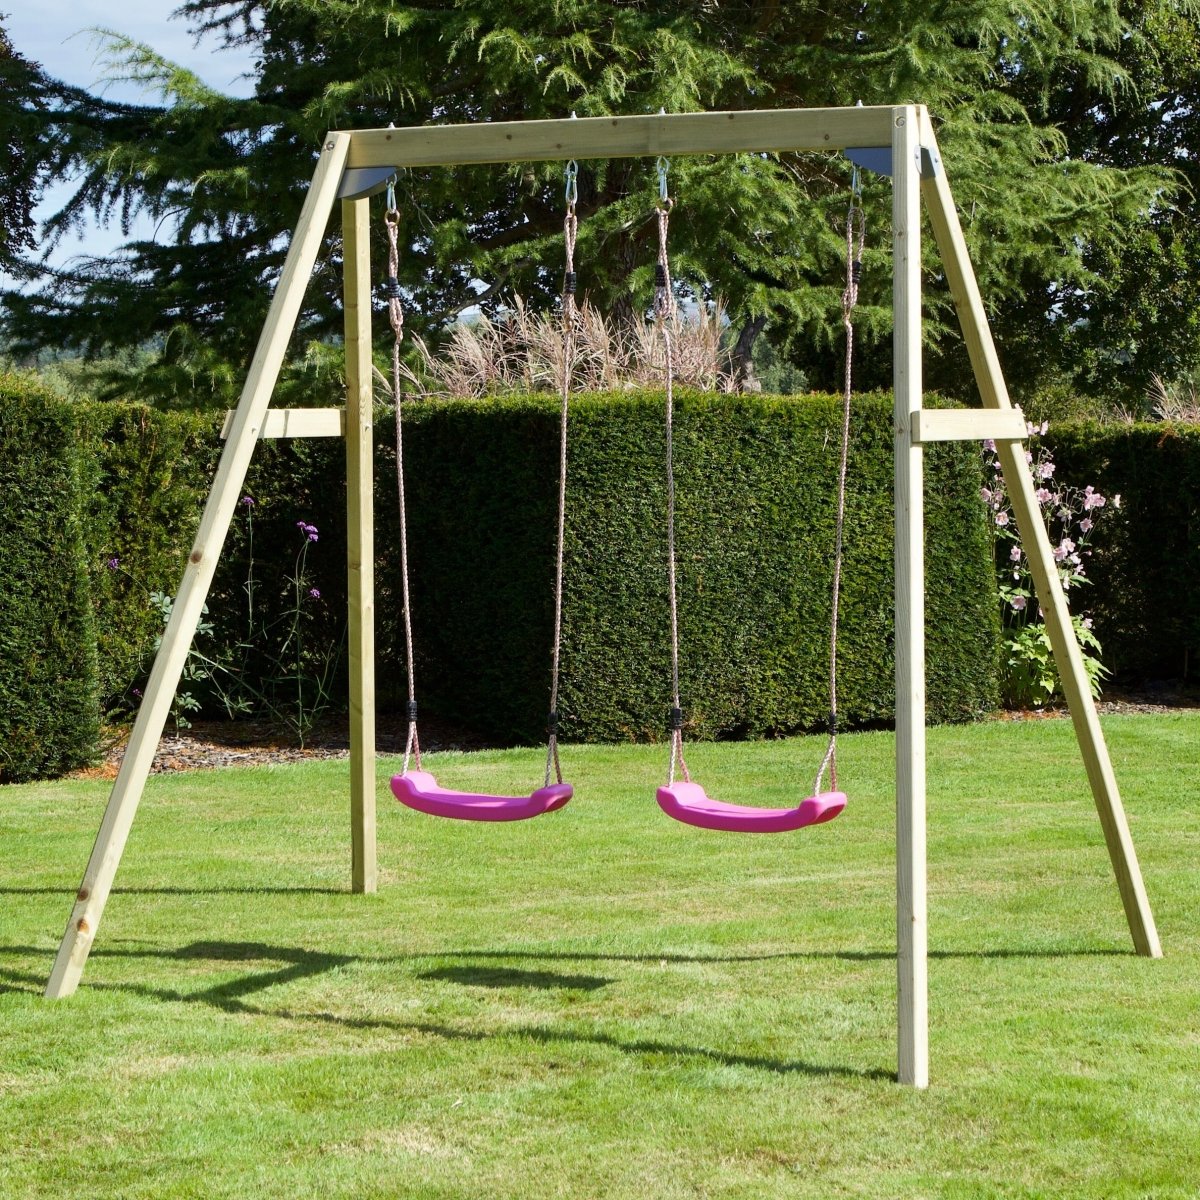 Rebo Active Kids Range Wooden Garden Double Swing Set – Pink